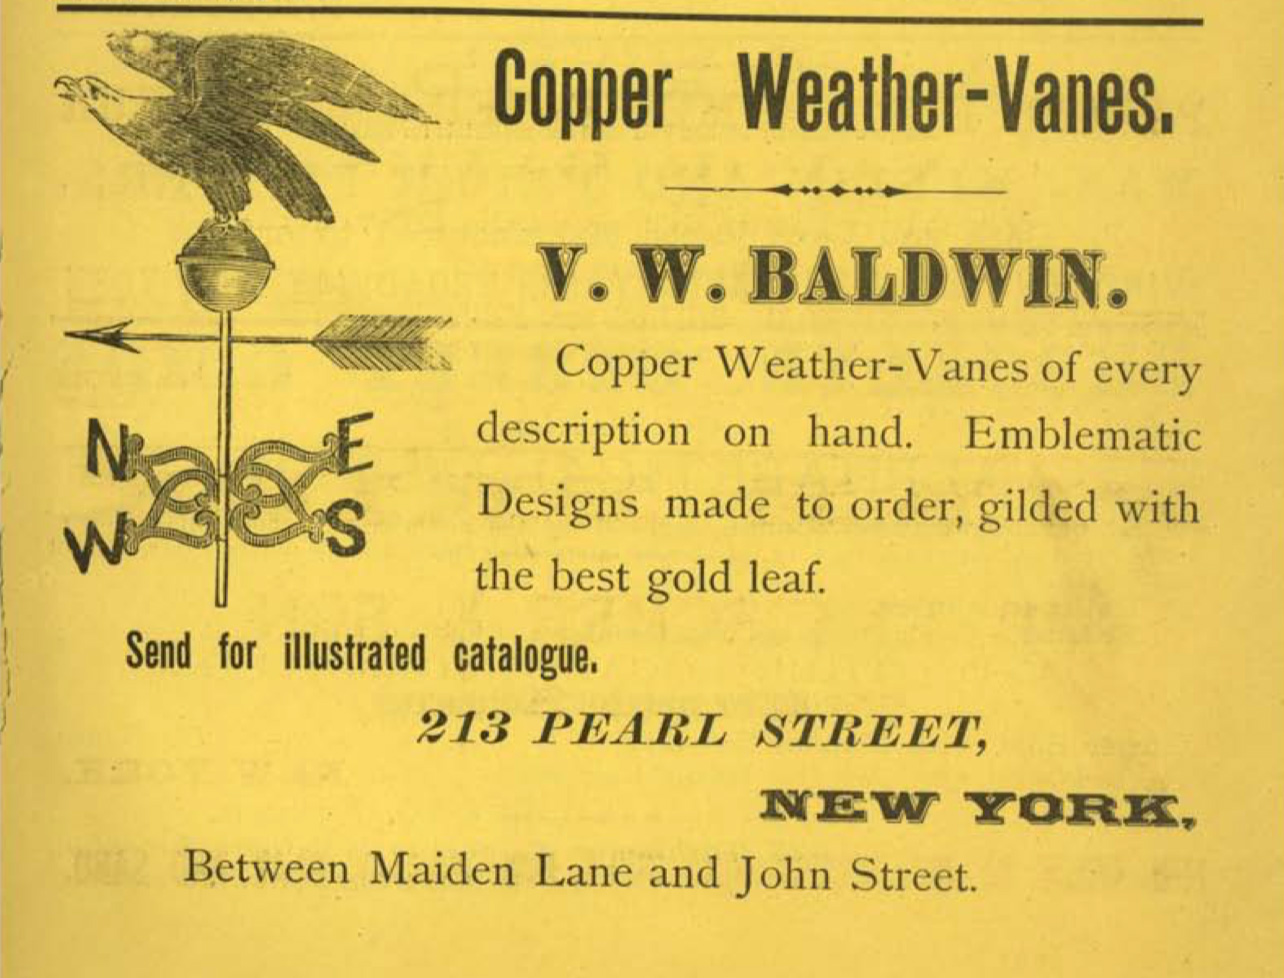 V.W. Baldwin directory ad, 1874.